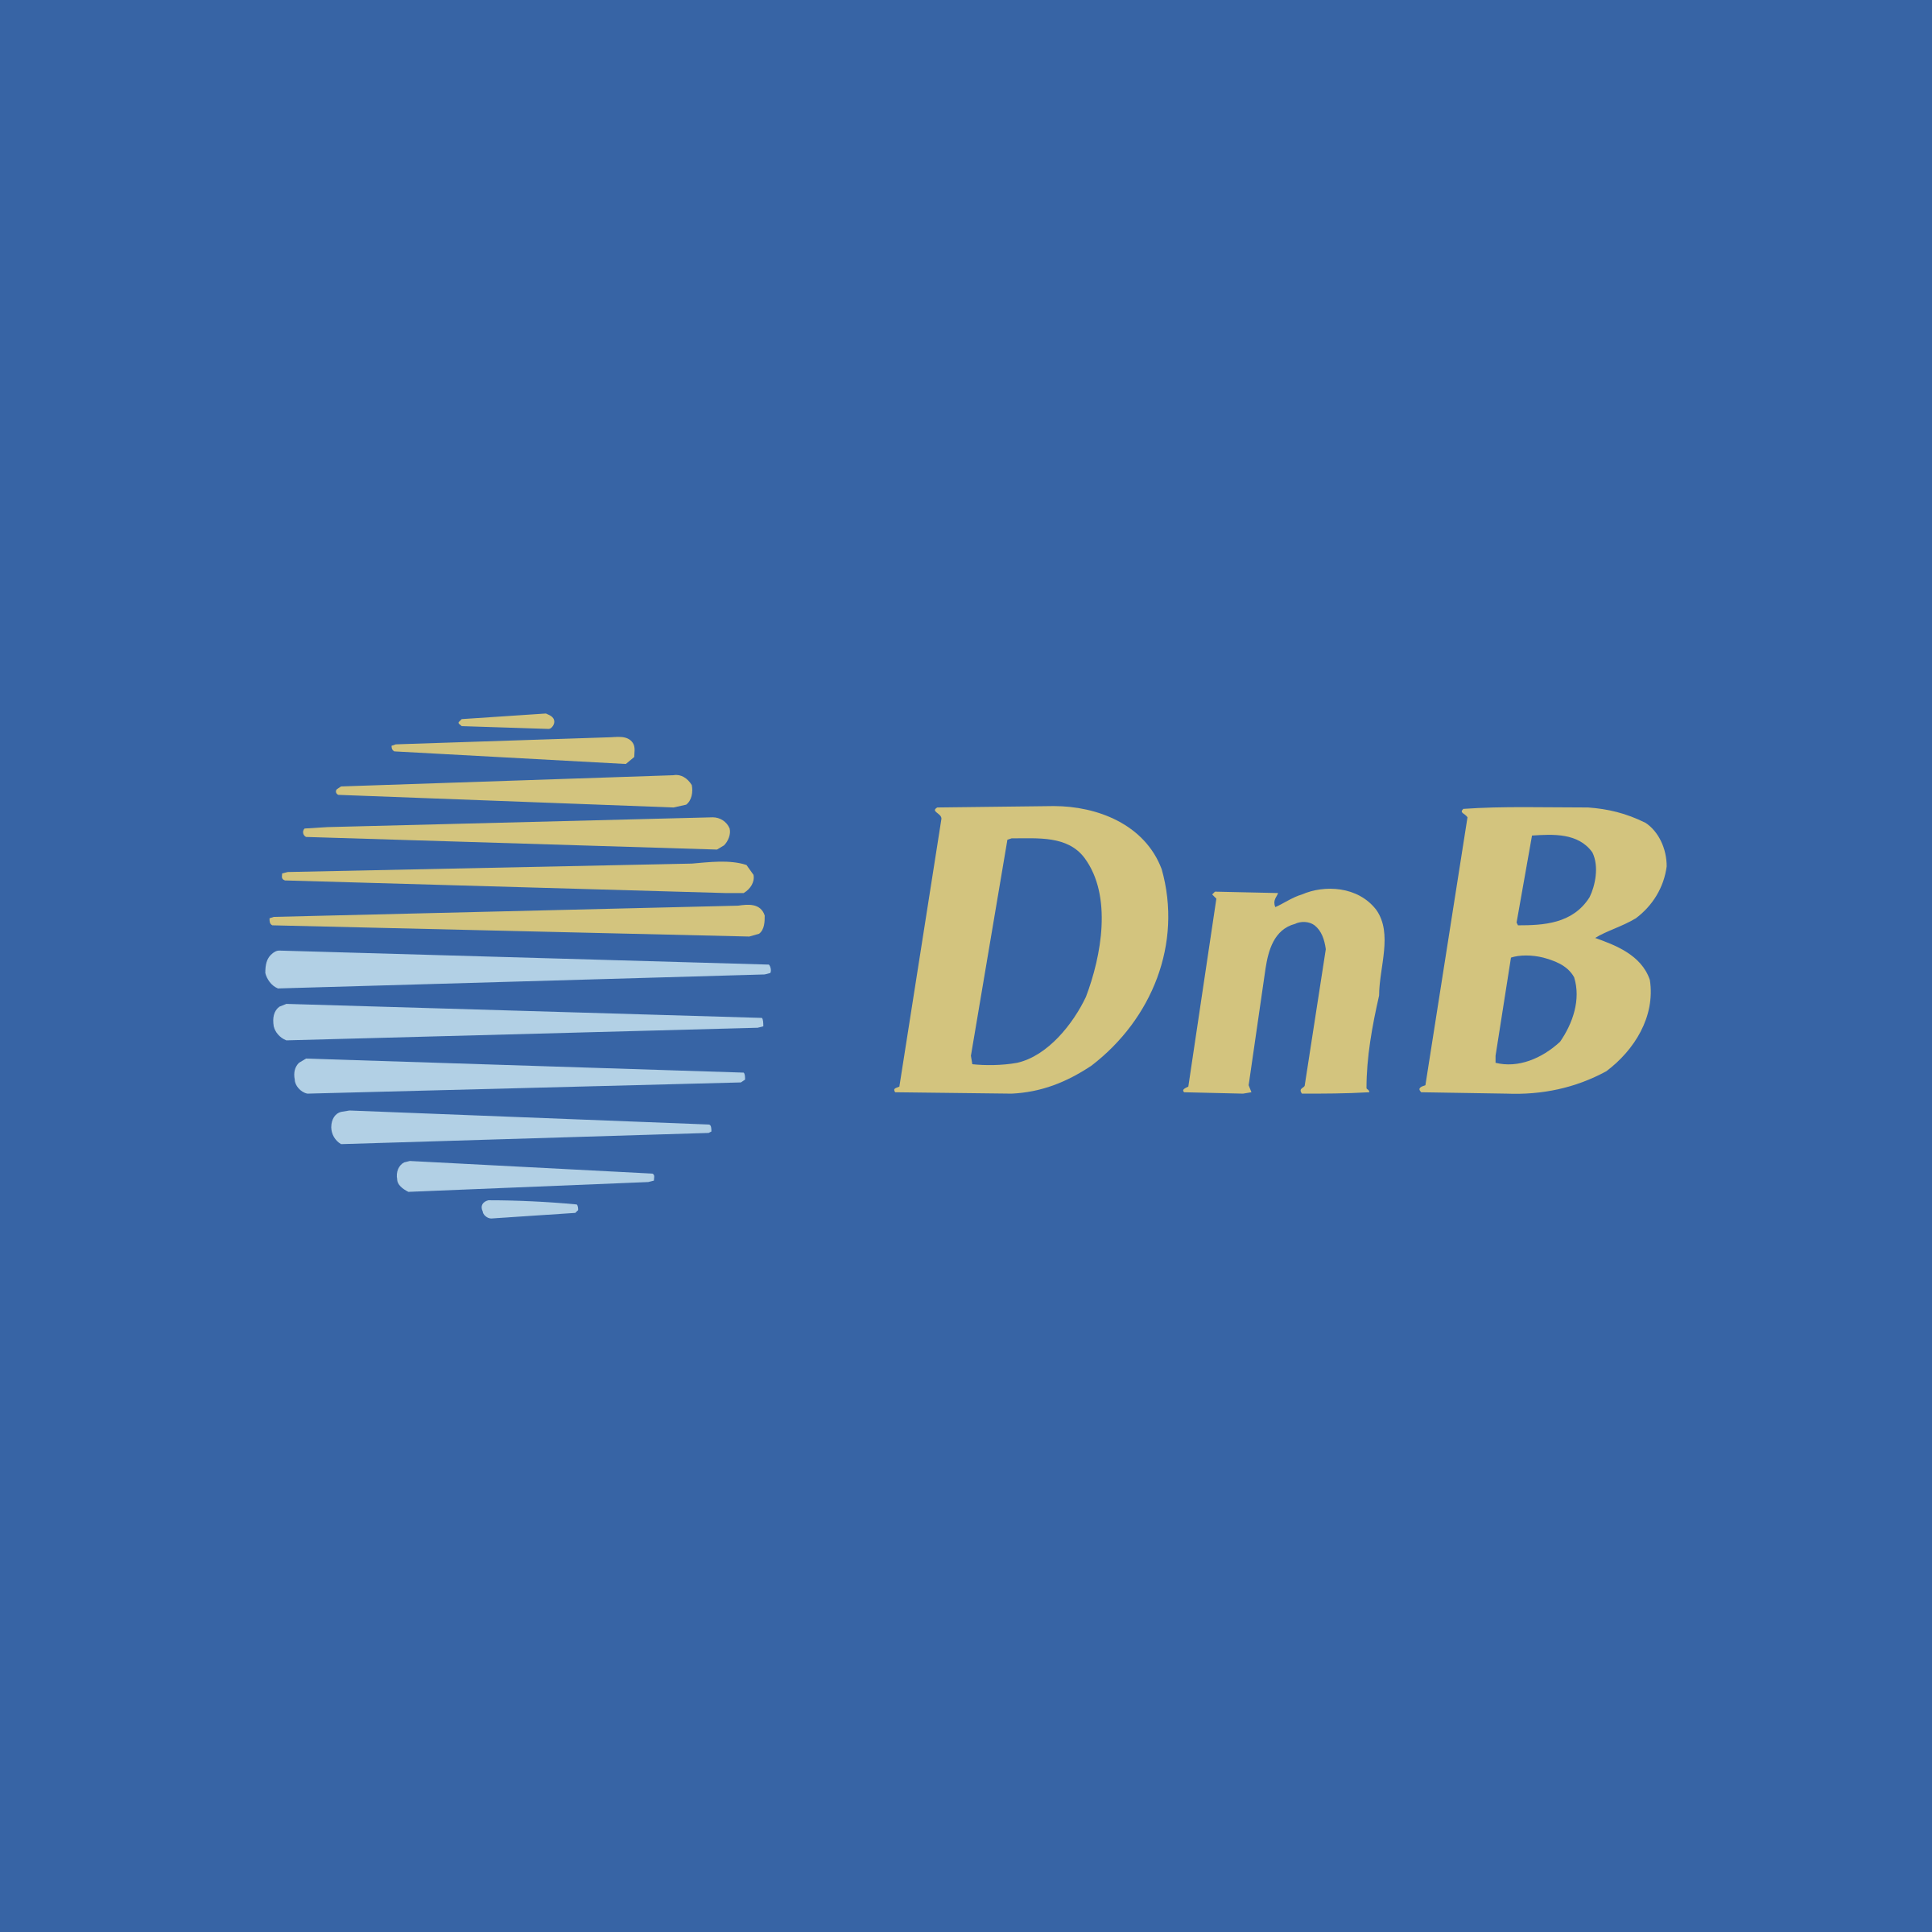 DNB Logo - DnB Logo PNG Transparent & SVG Vector - Freebie Supply